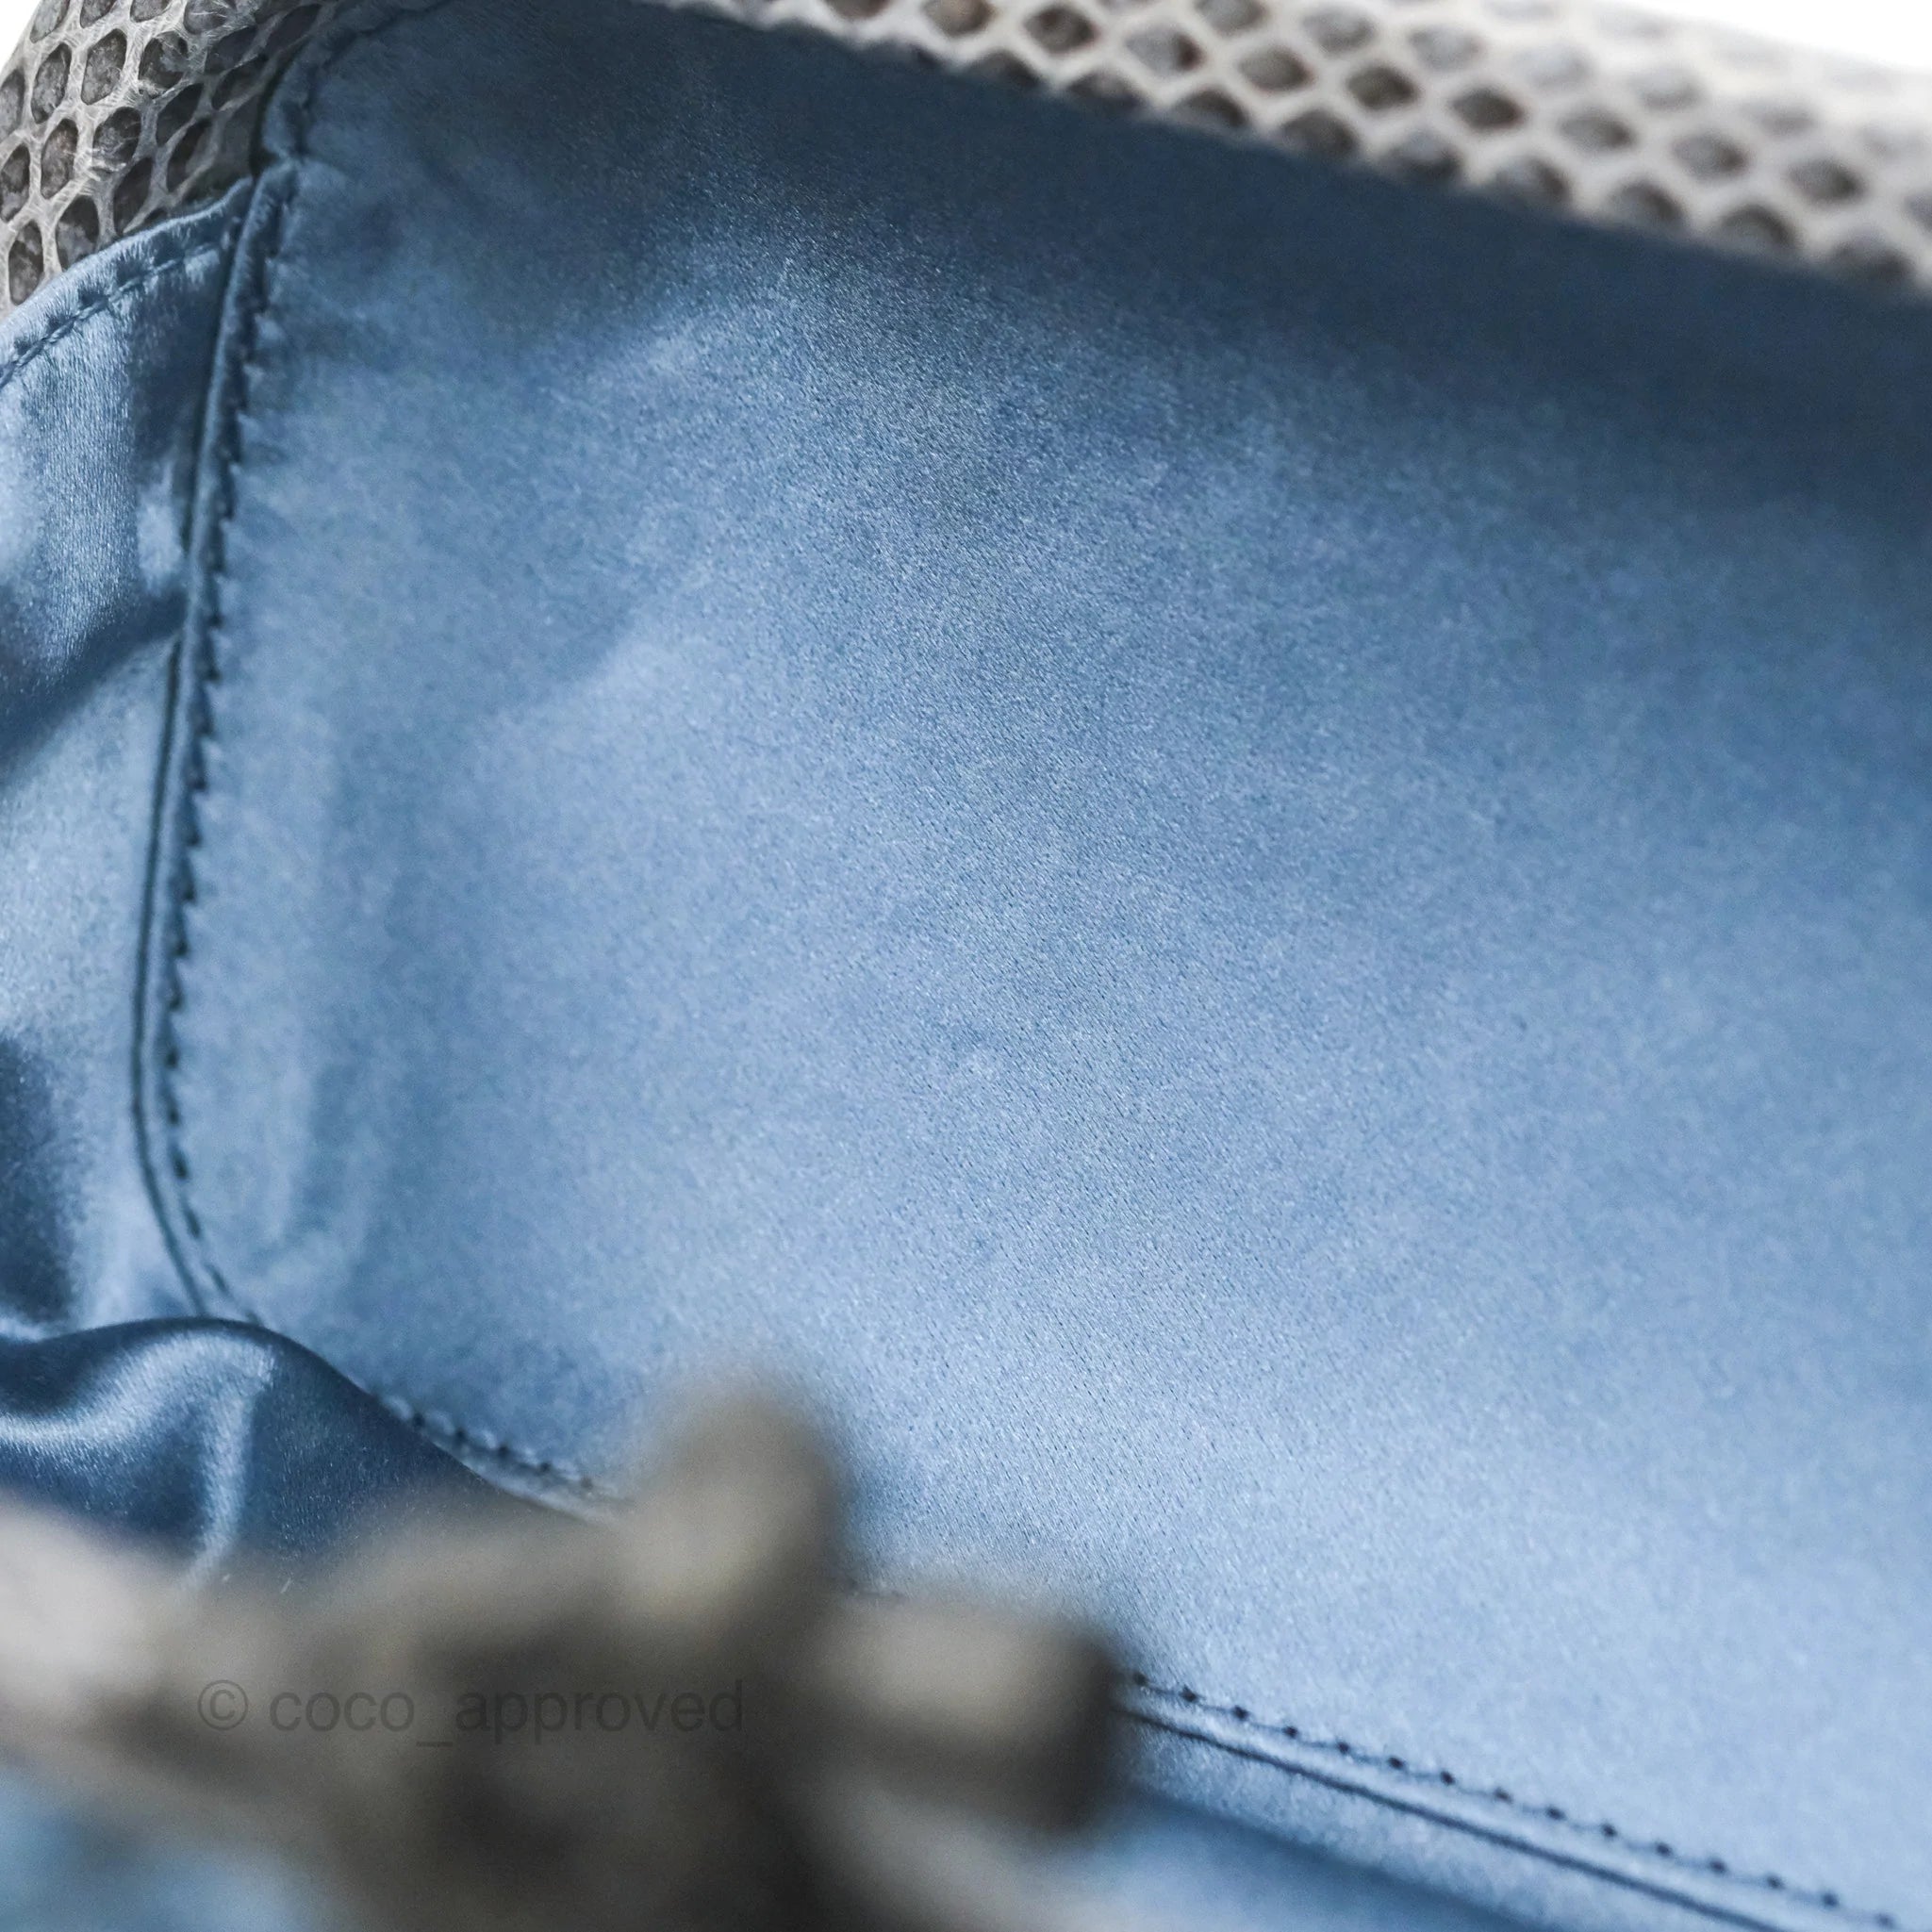 Bottega Veneta Grayish Blue Satin Ayers Stretch Knot Clutch – The Closet